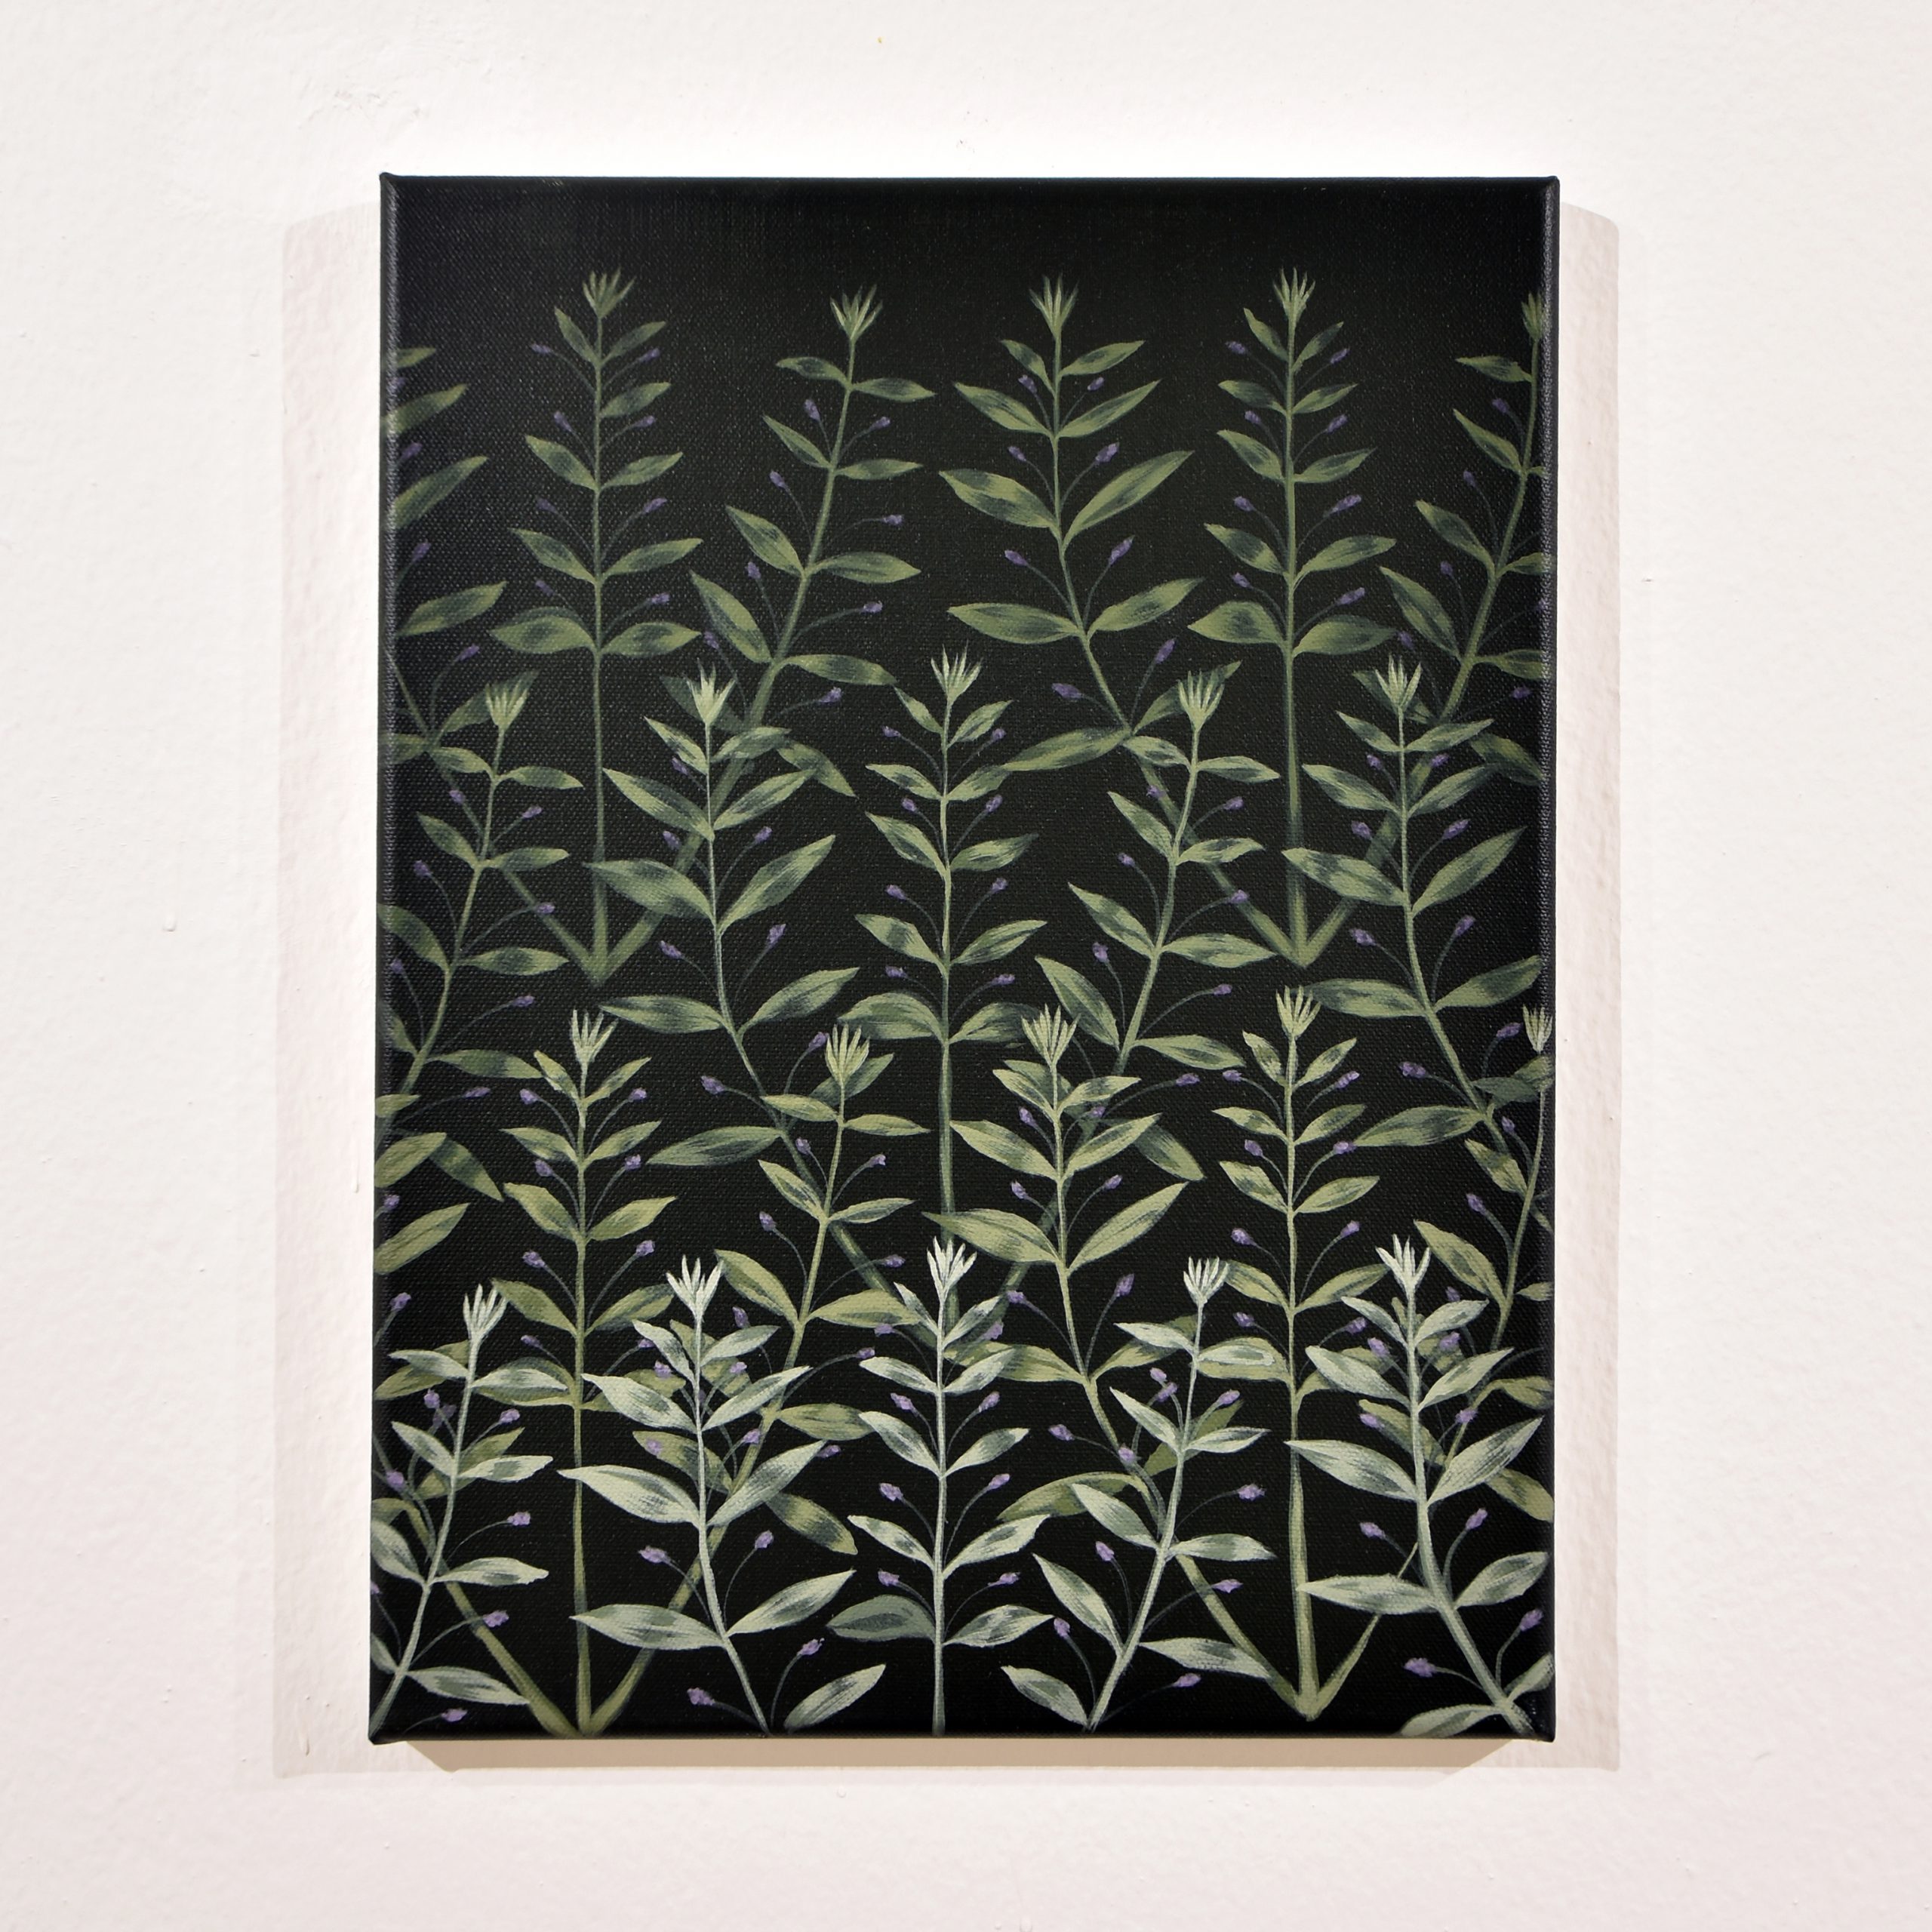 Francesco Ciavaglioli - Klon, 2021, acrilico su tela, 40 x 30 cm